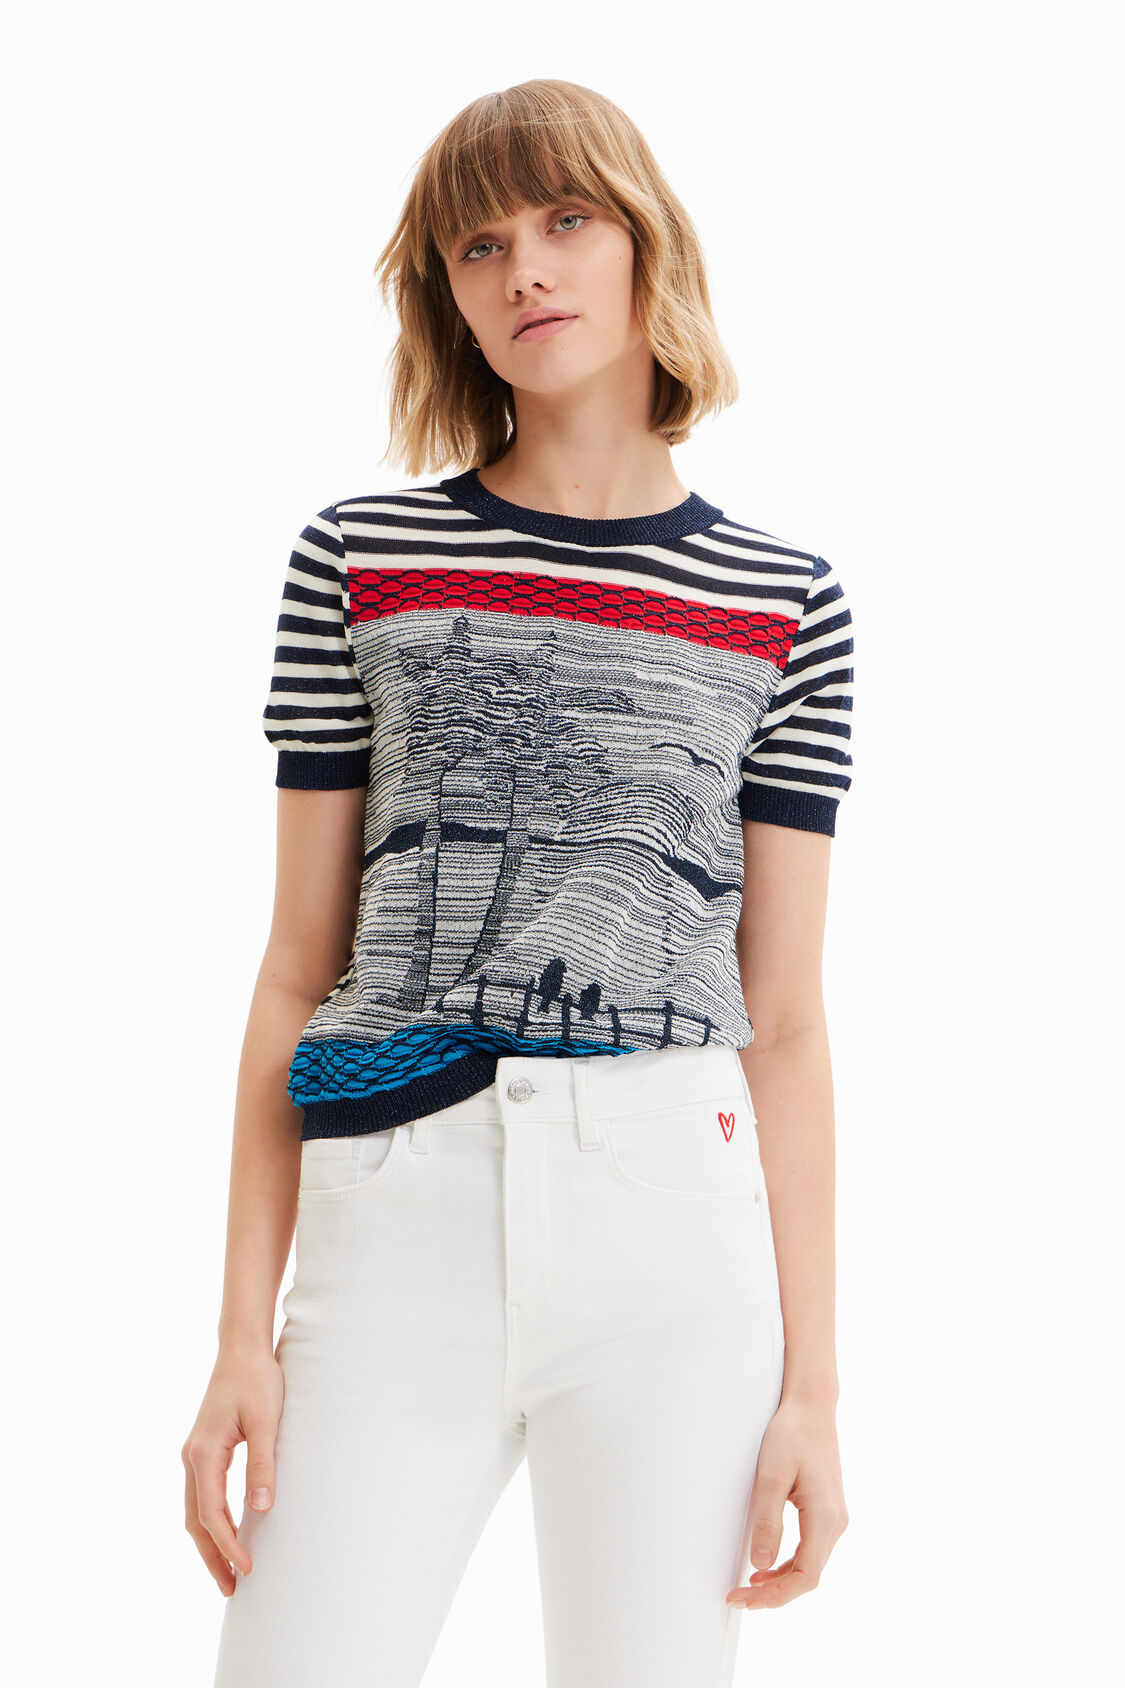 Camiseta marinera de mujer Desigual.com